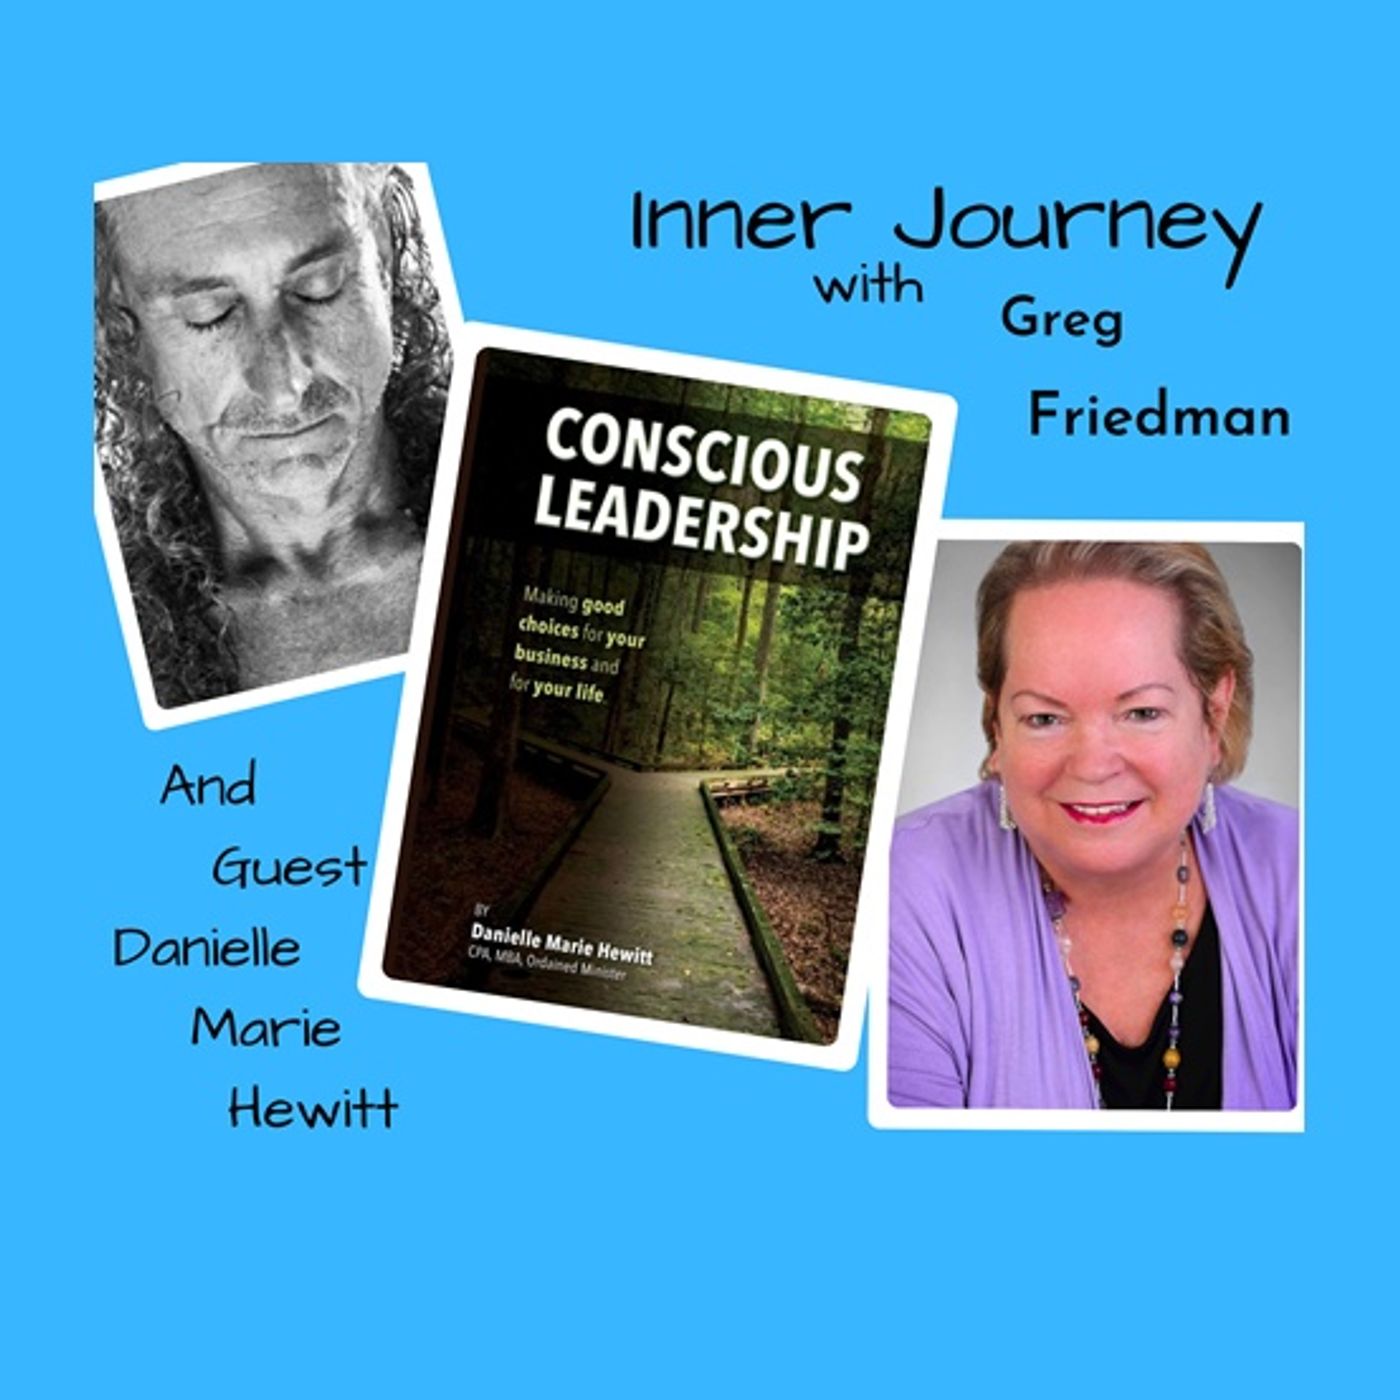 Inner Journey with Greg Friedman welcomes Daniell Marie Hewitt